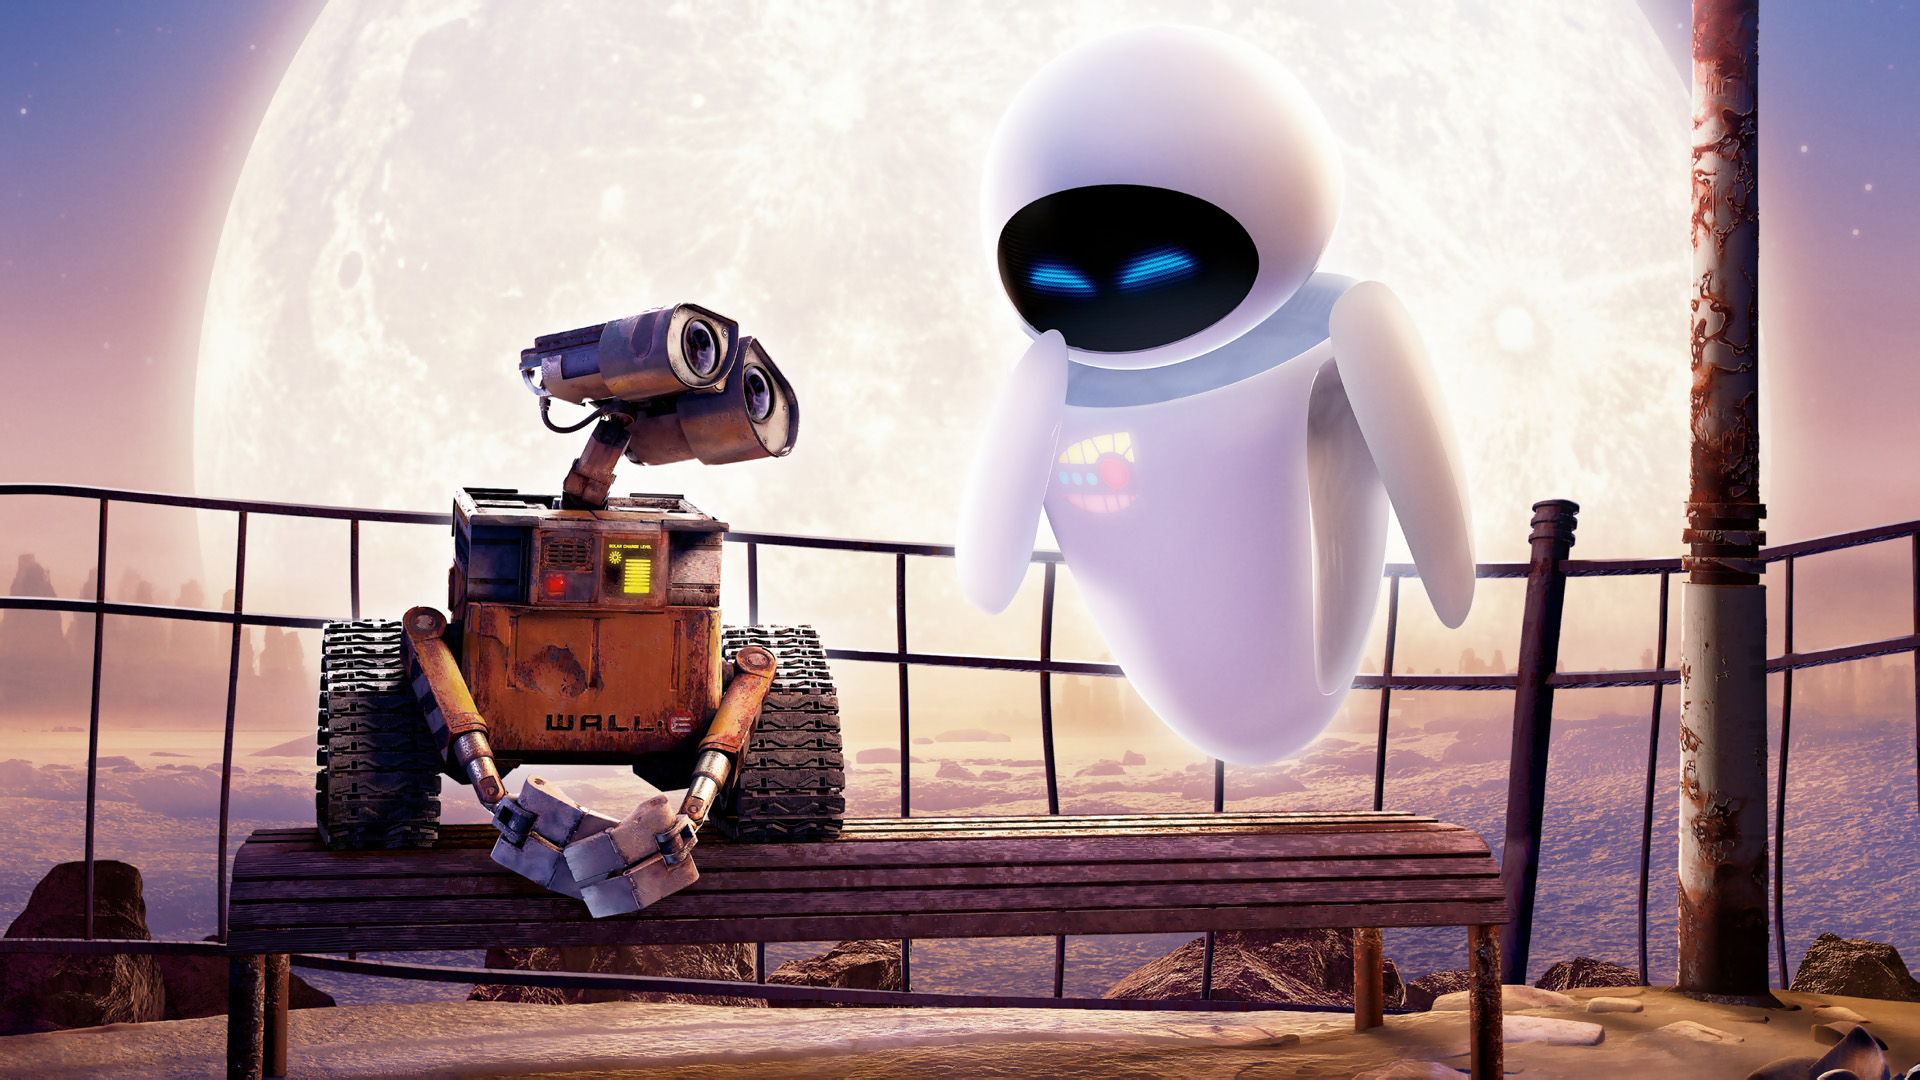 Wall E S Got A Heart Love Transcends An Analysis To Andrew Stanton S Wall E Disney S Robot Hero Quiet On D Set